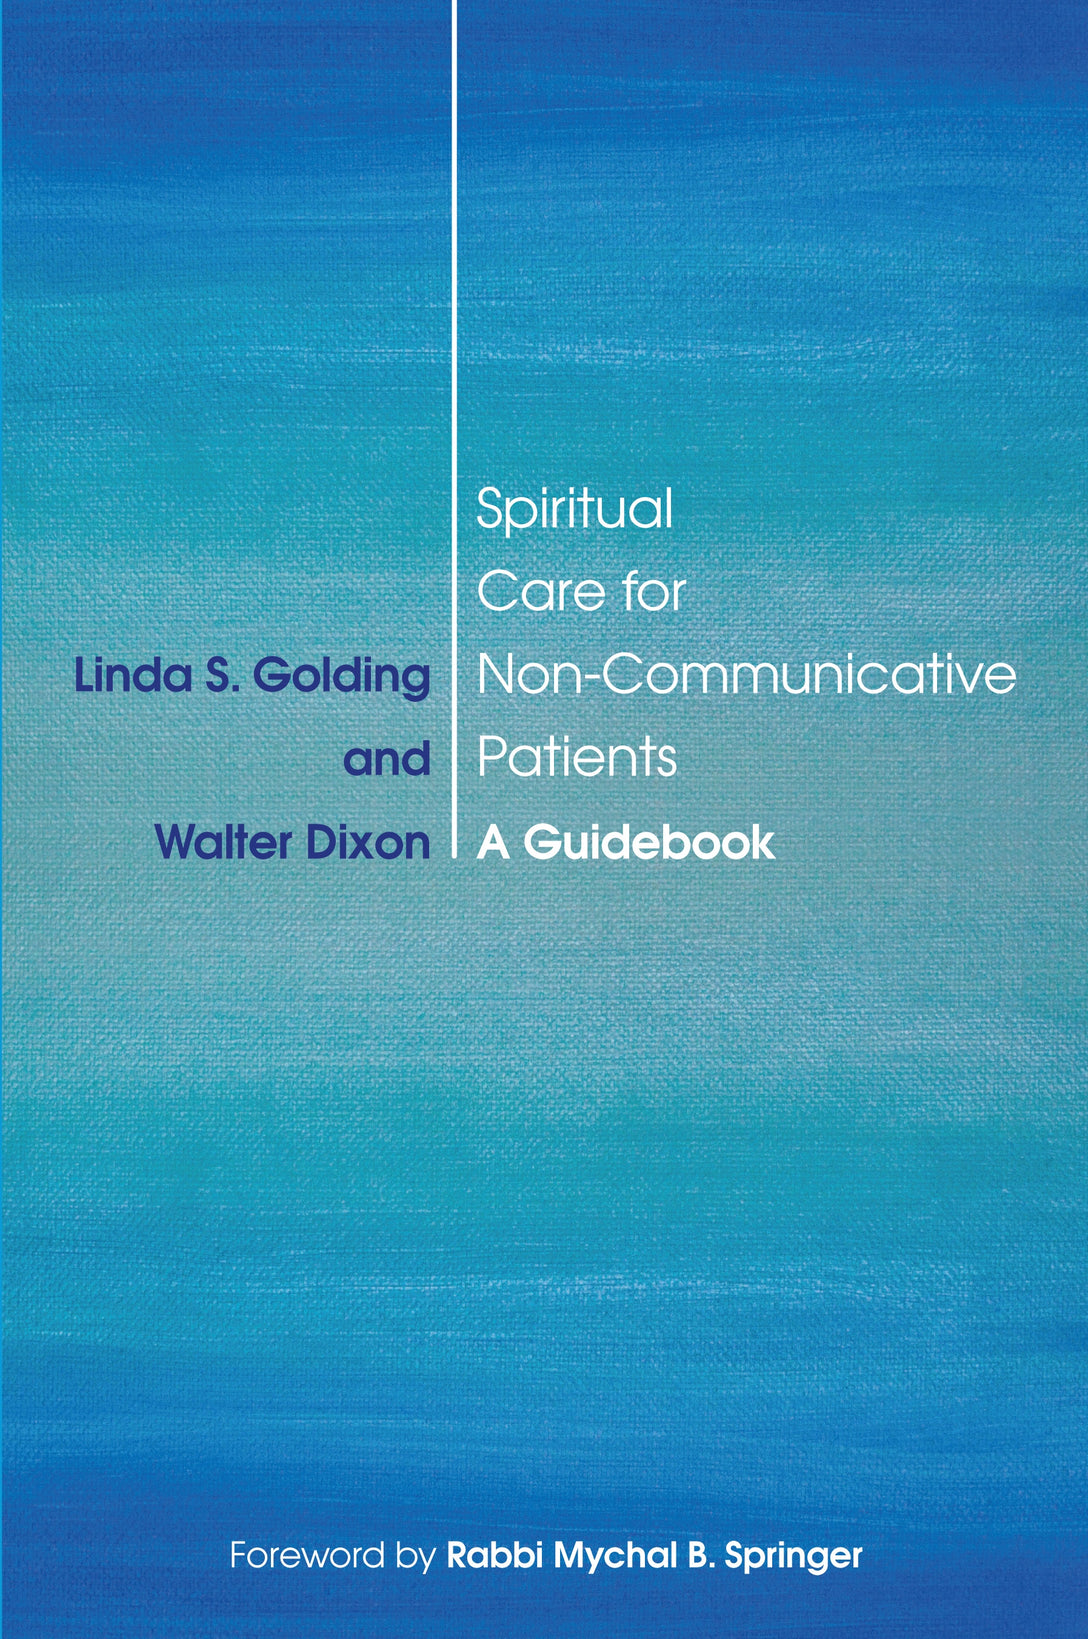 Spiritual Care for Non-Communicative Patients by Linda S. Golding, Walter Dixon, Rabbi Mychal B. Springer